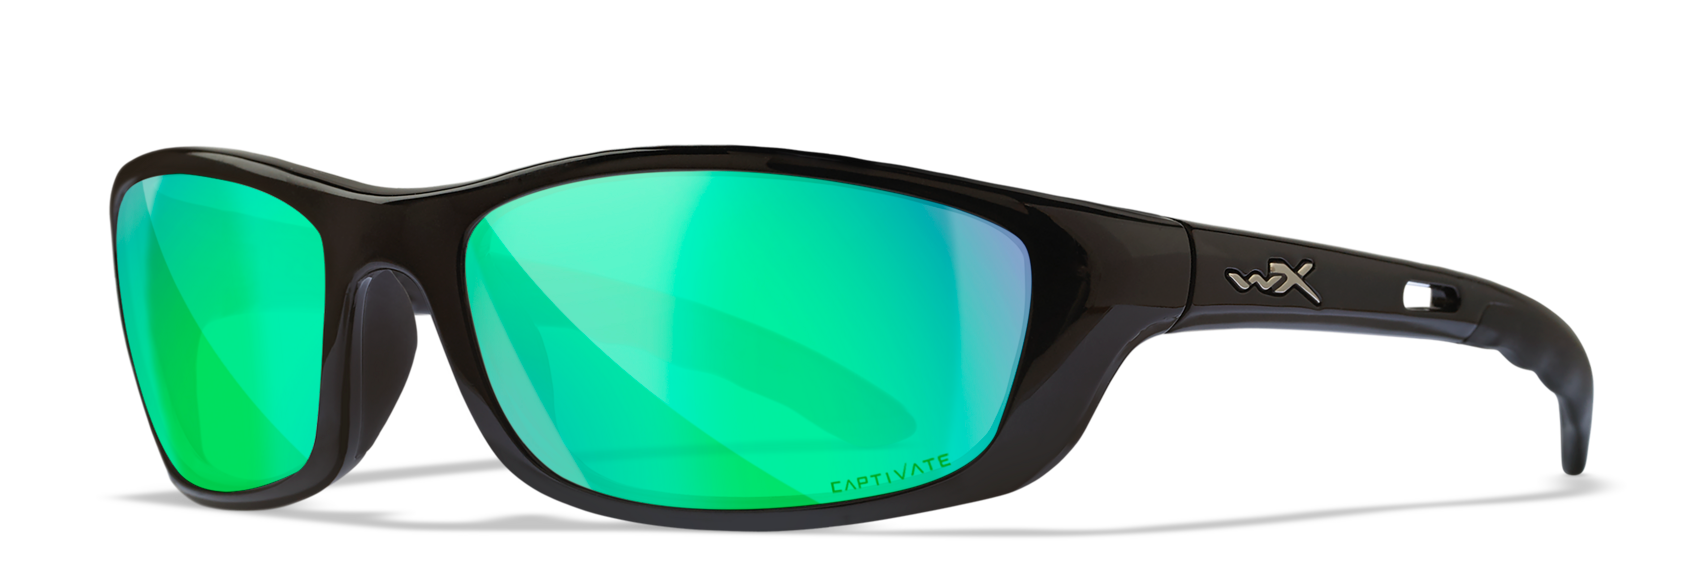 Wiley X P-17 Oval Sunglasses  Gloss Black 61-18-120